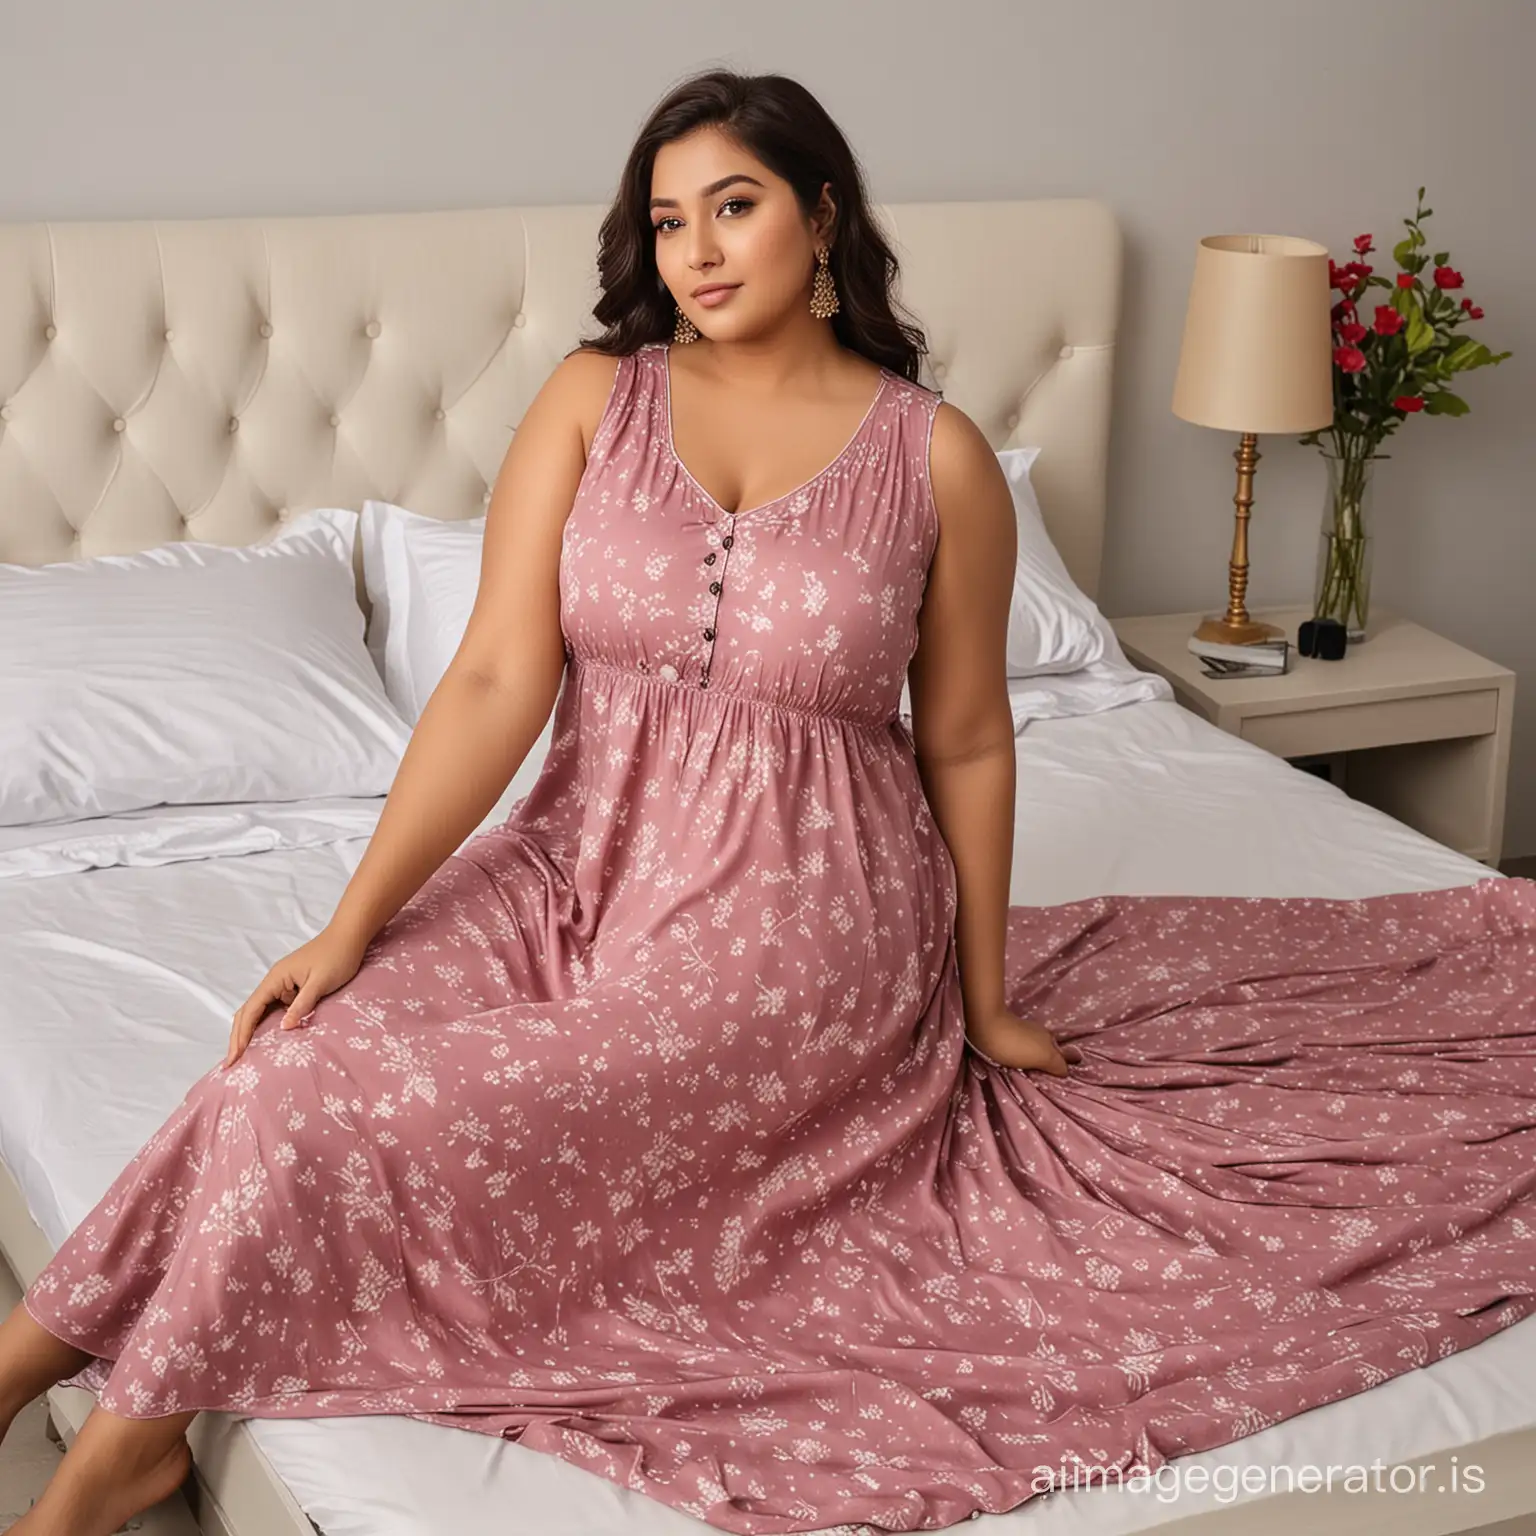 Beautiful plus size indian women wore sleeveless nighty in bed